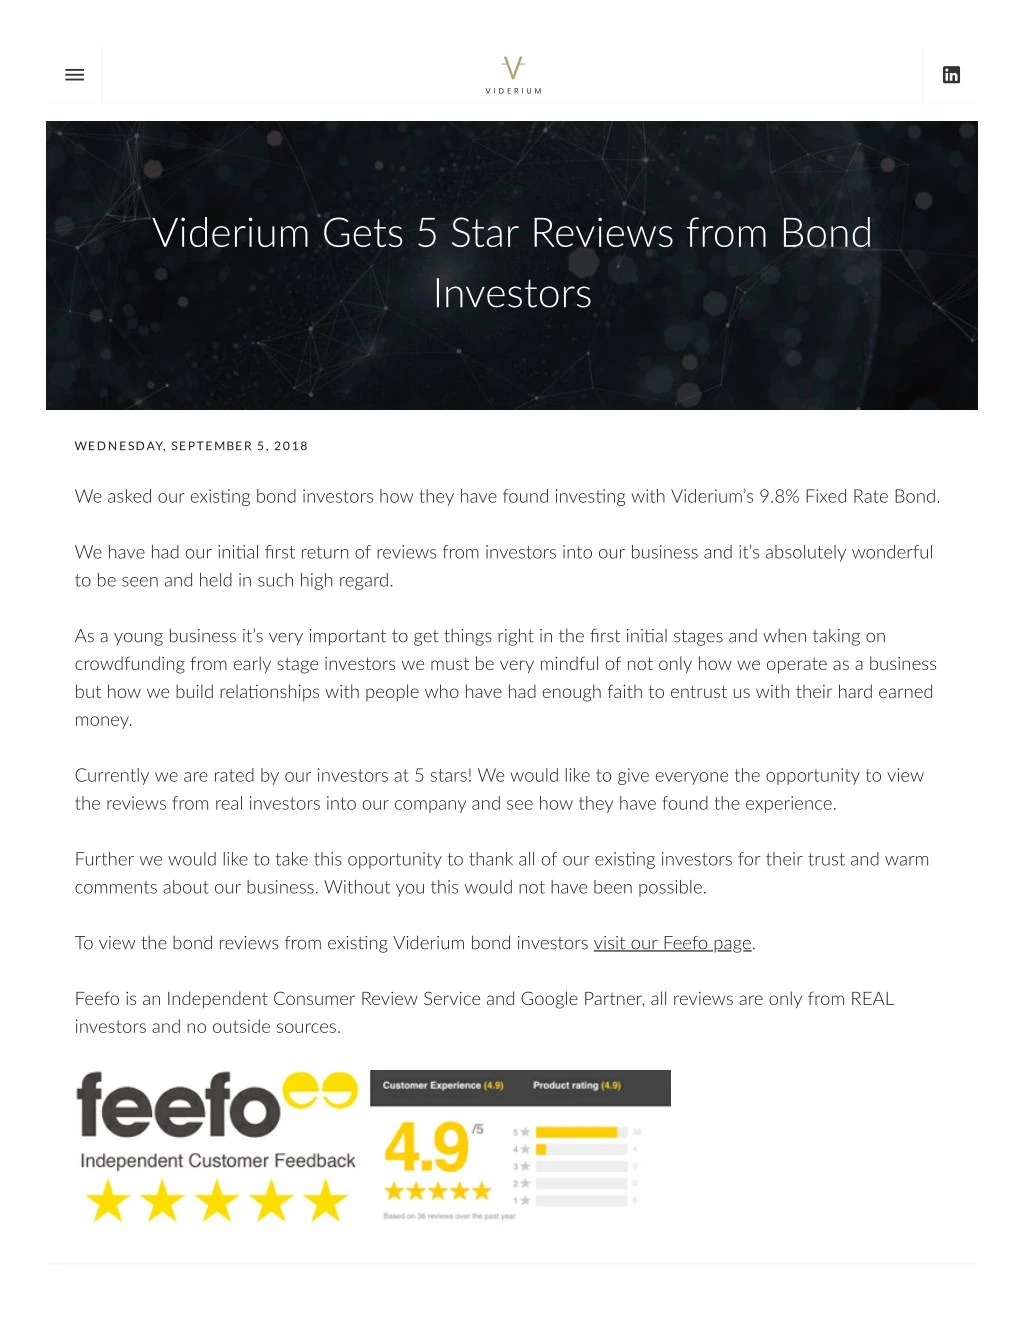 viderium gets 5 star reviews from bond investors